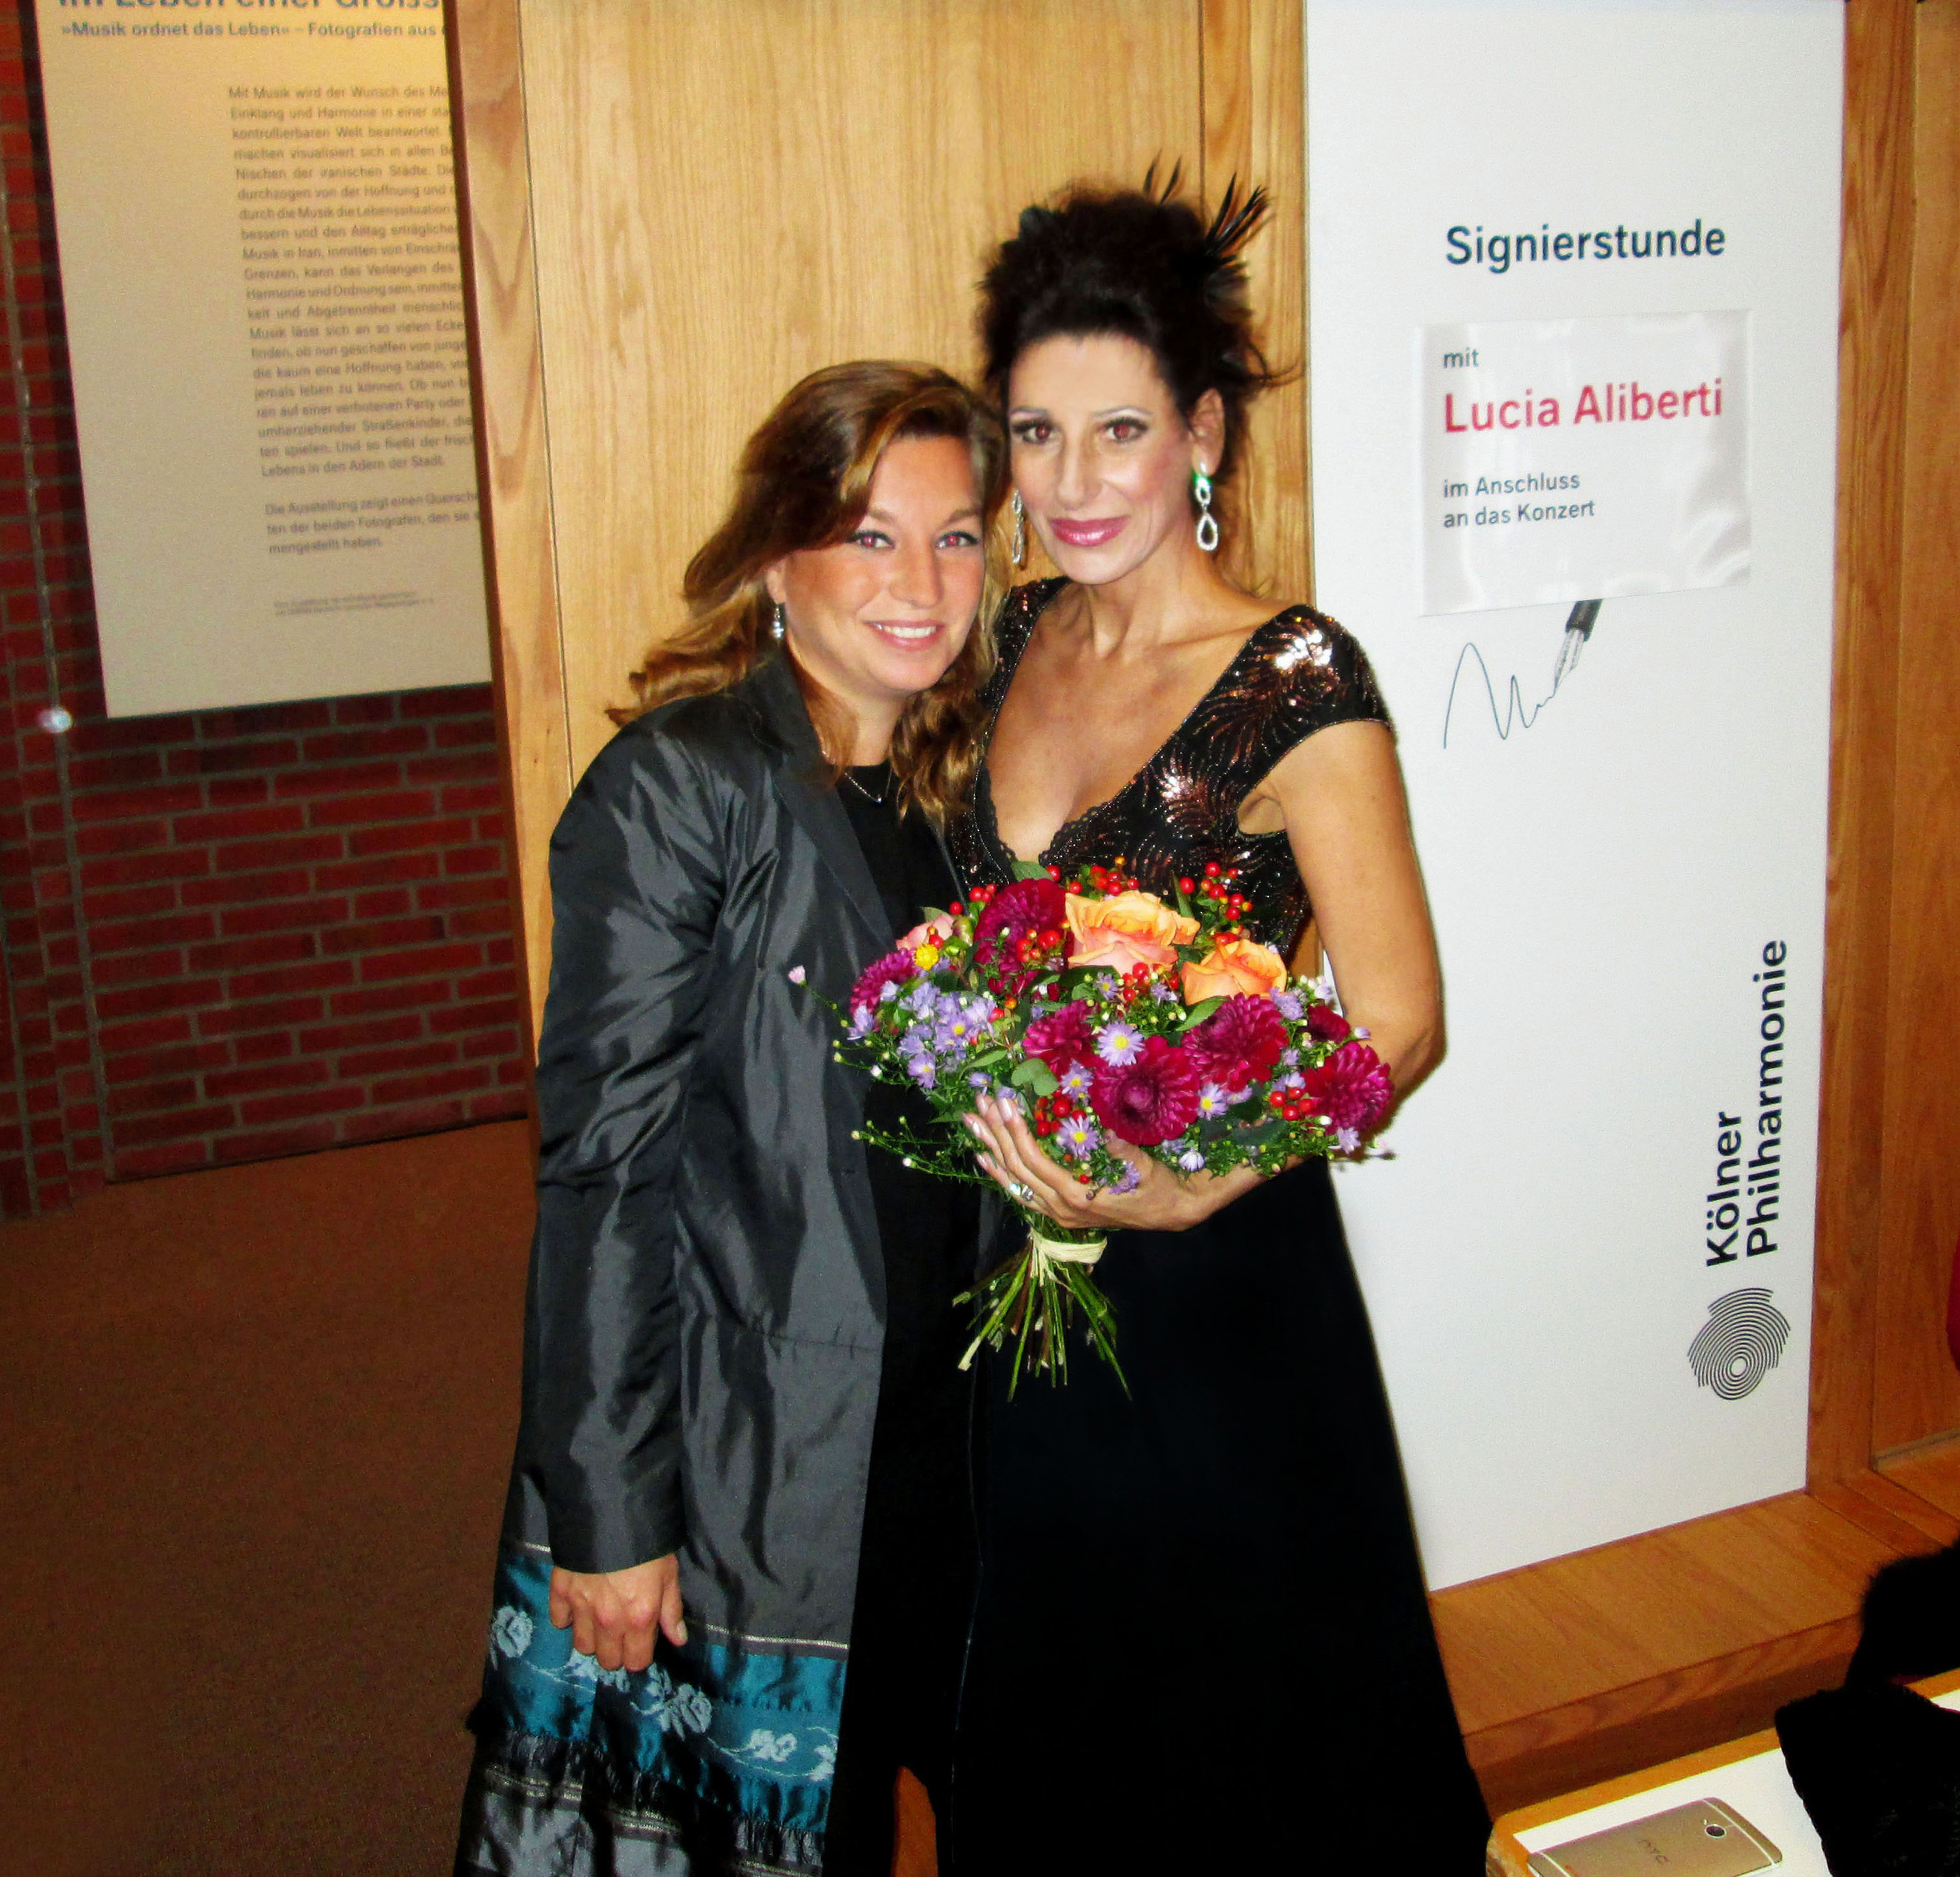 Lucia Aliberti with her best friend Bernadette Herzog⚘Concert⚘Kolner Philharmonie⚘Koln⚘Autograph Session⚘Escada Fashion⚘:http://www.luciaaliberti.it #luciaaliberti #bernadetteherzog #kolnerphilharmonie #koln #concert #autographsession #escadafashion